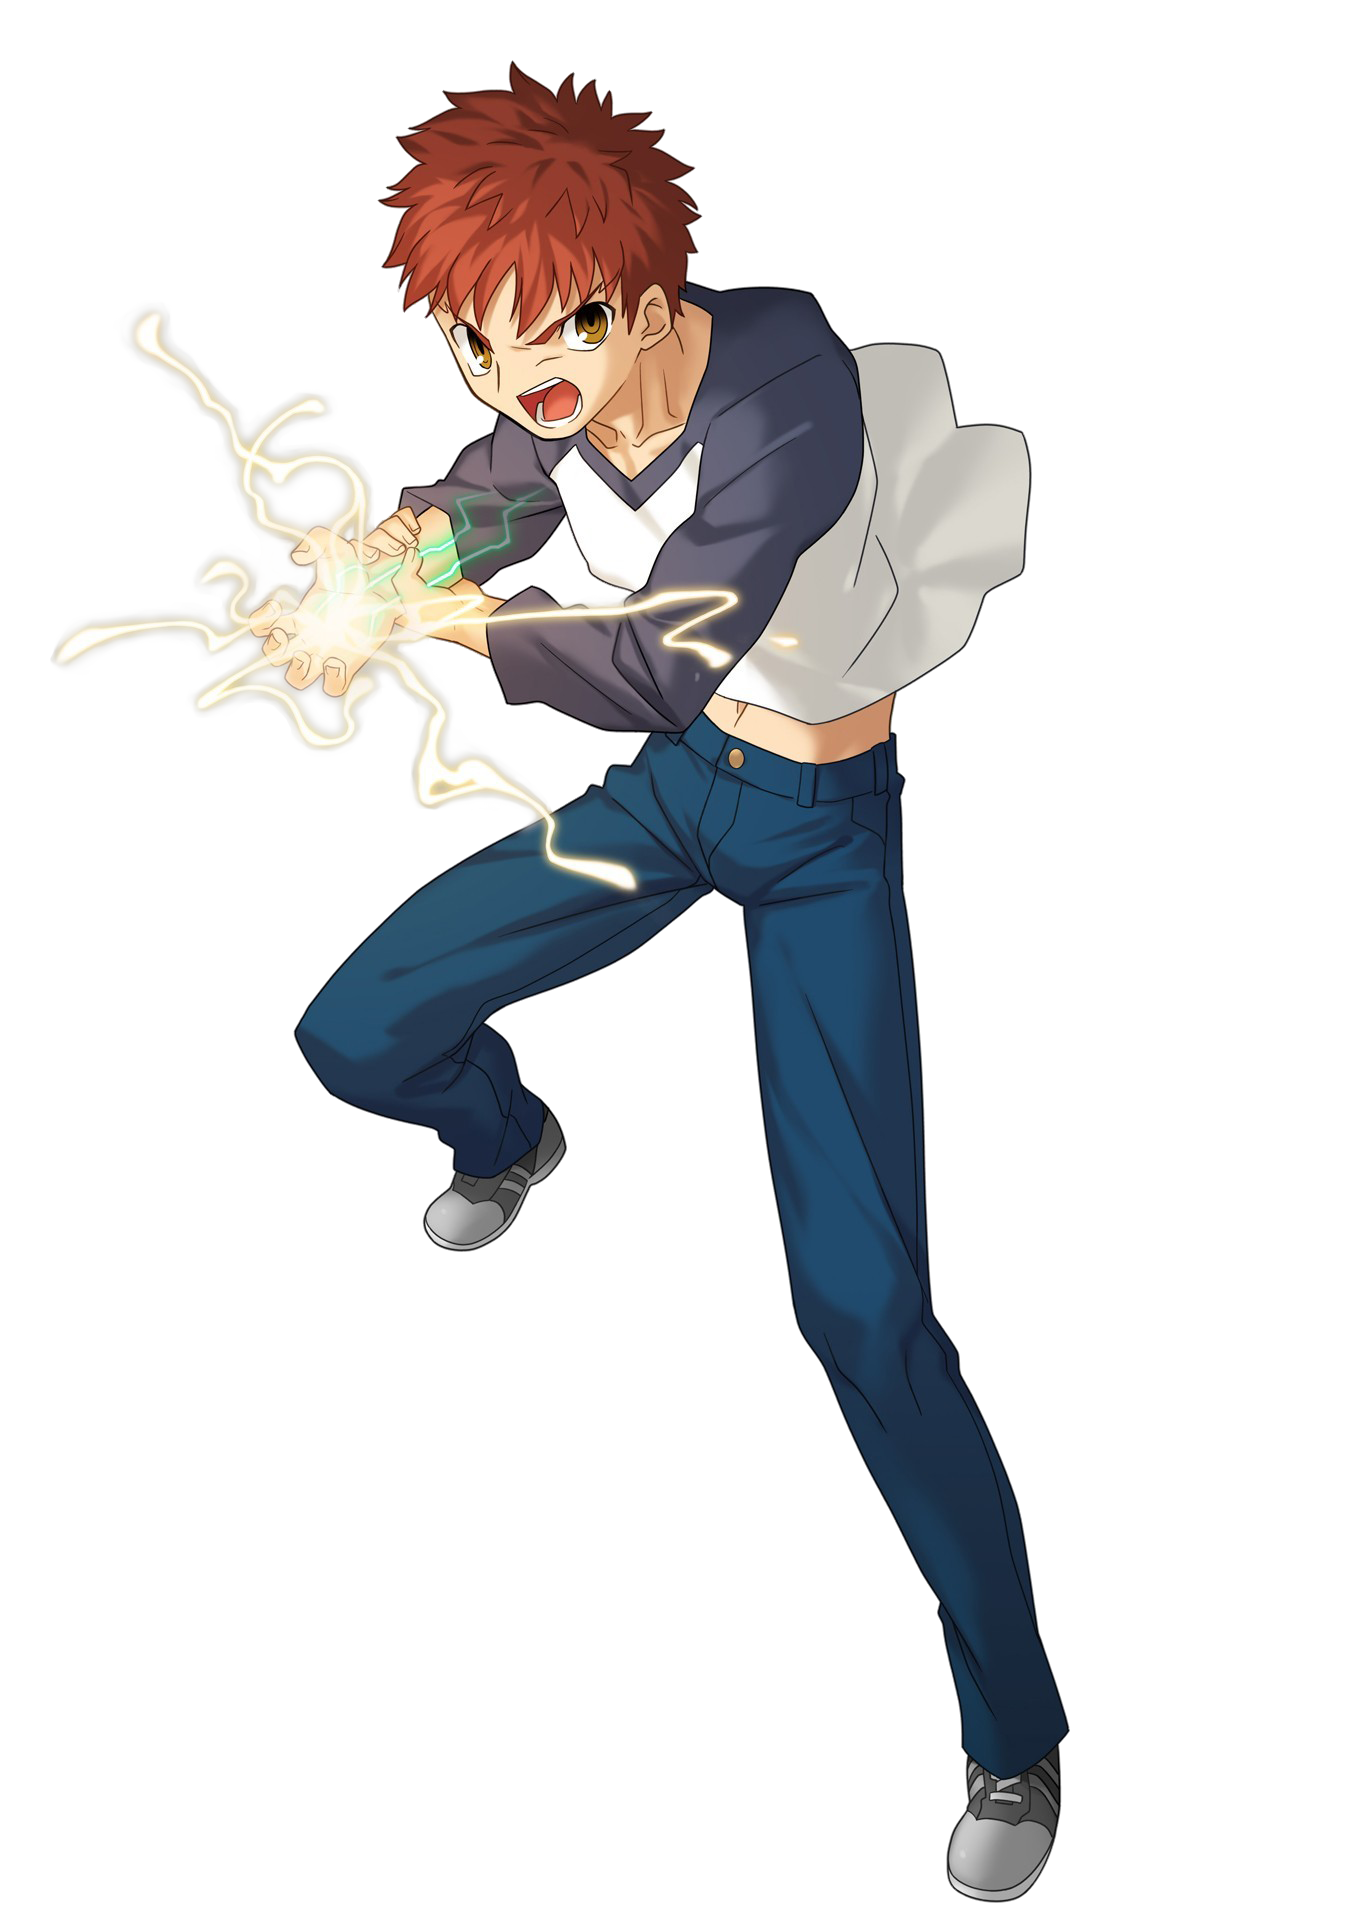 Anime Shirou Kotomine Amakusa Shirou Tokisada FGO Fate/Apocrypha Cosplay  Costume | eBay